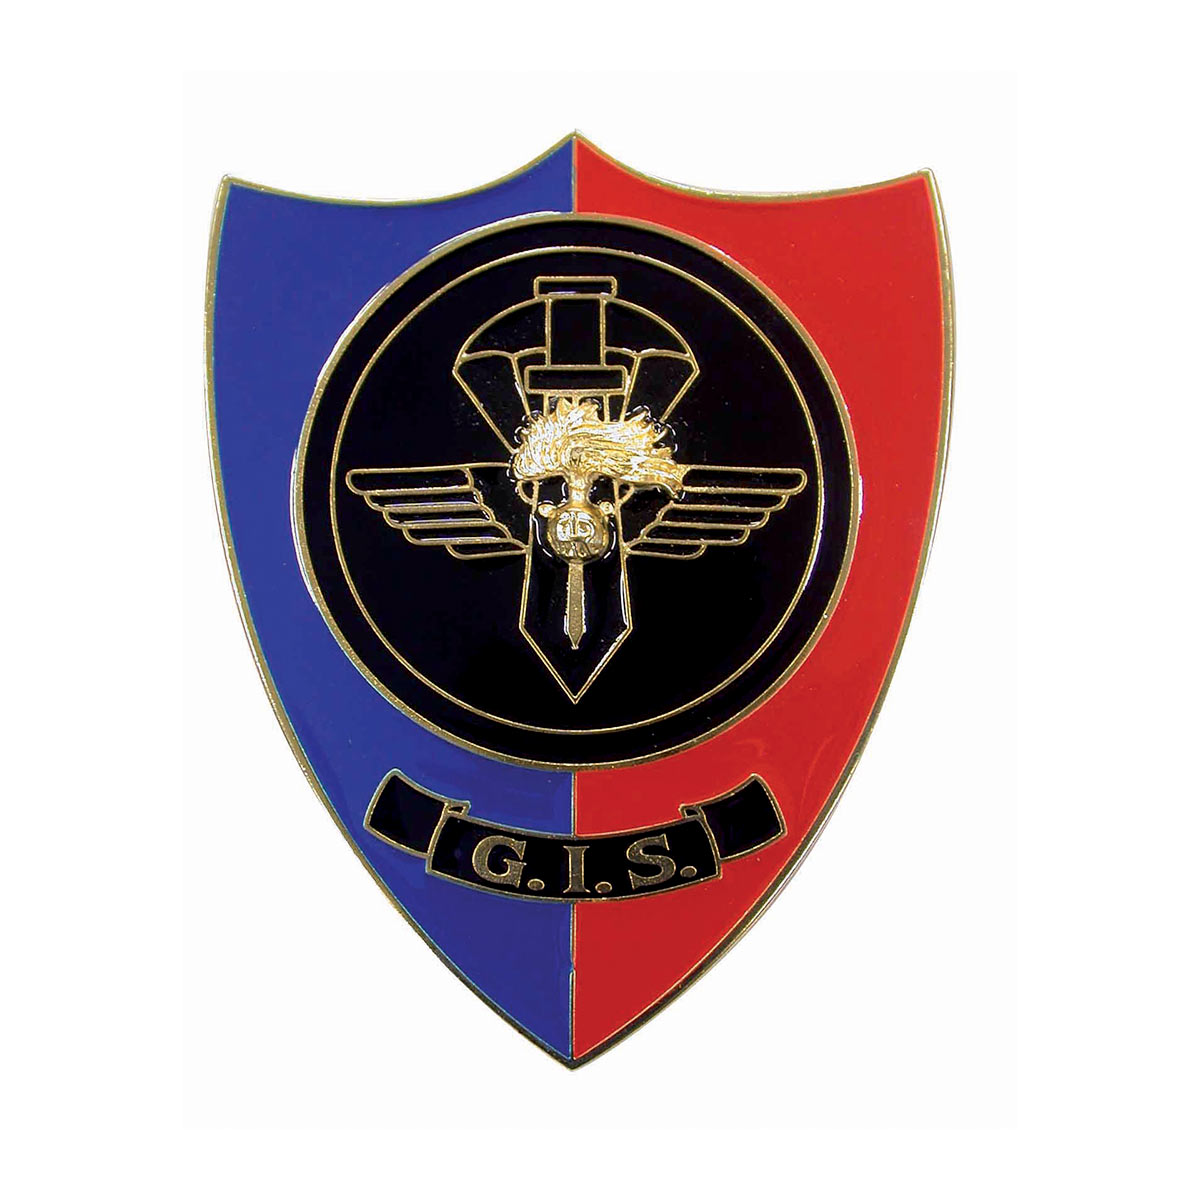 Distintivo G.i.s. Carabinieri